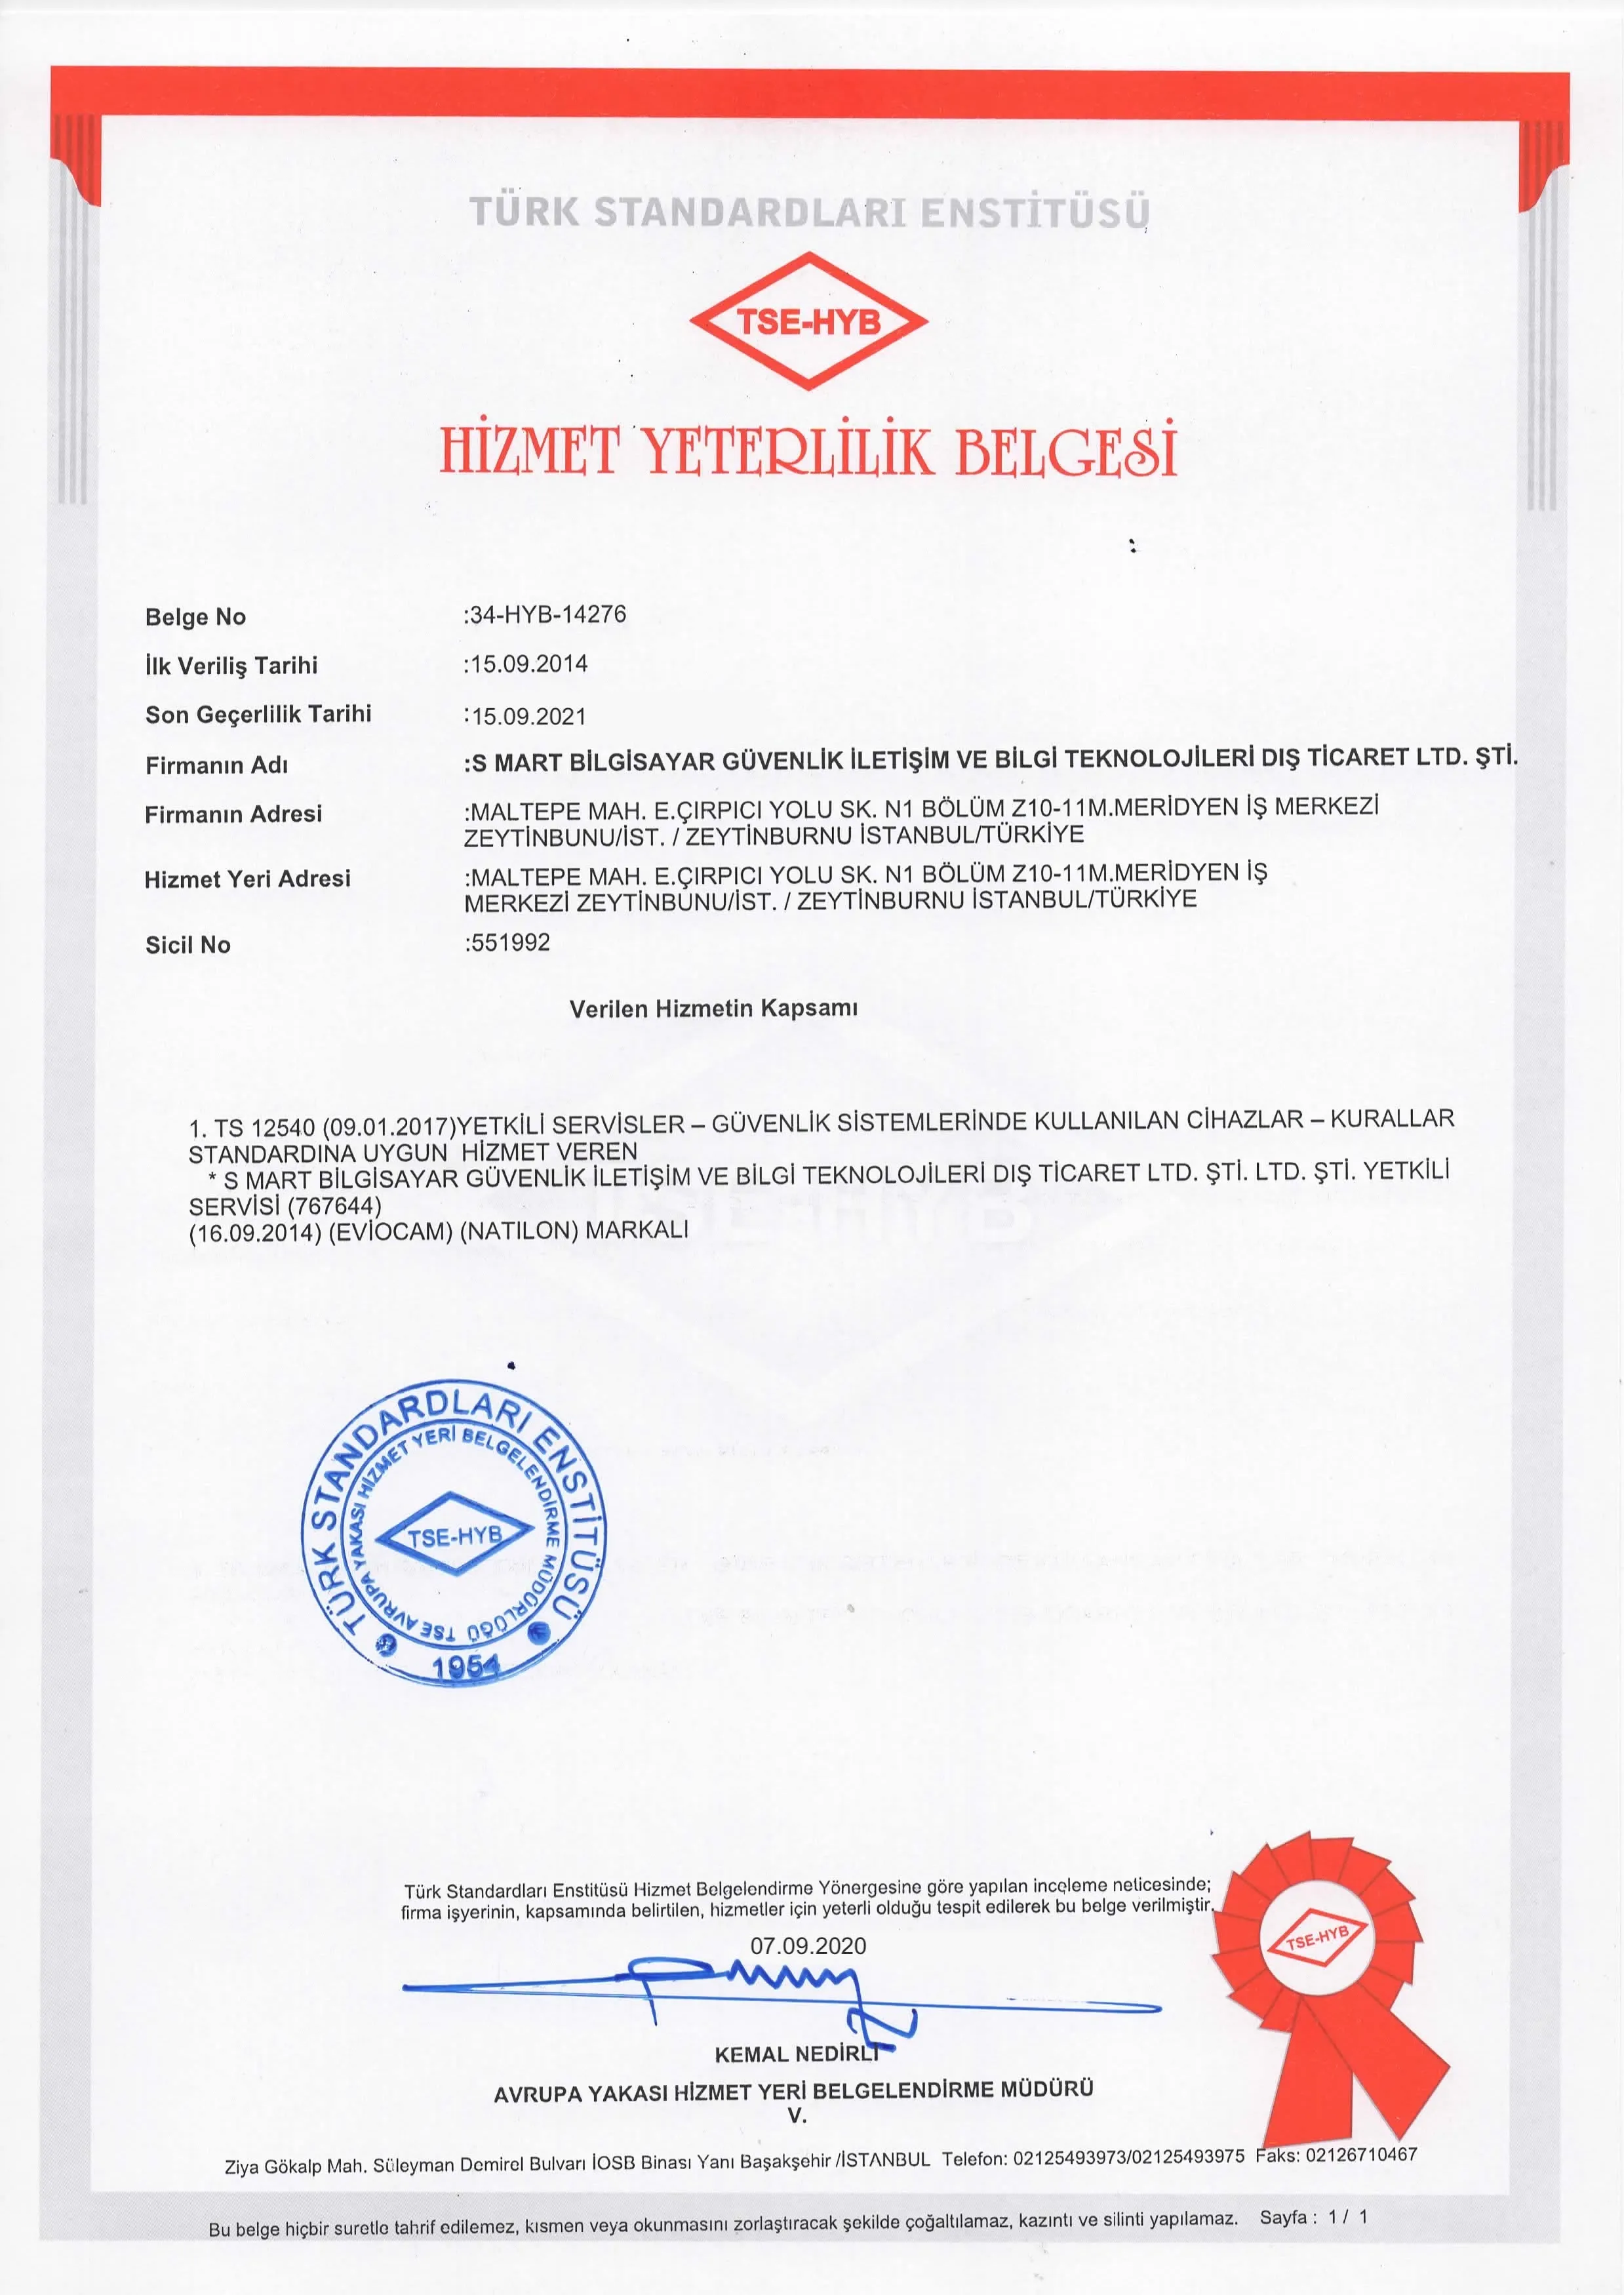 Turkish Standards Institute Service Qualification Document